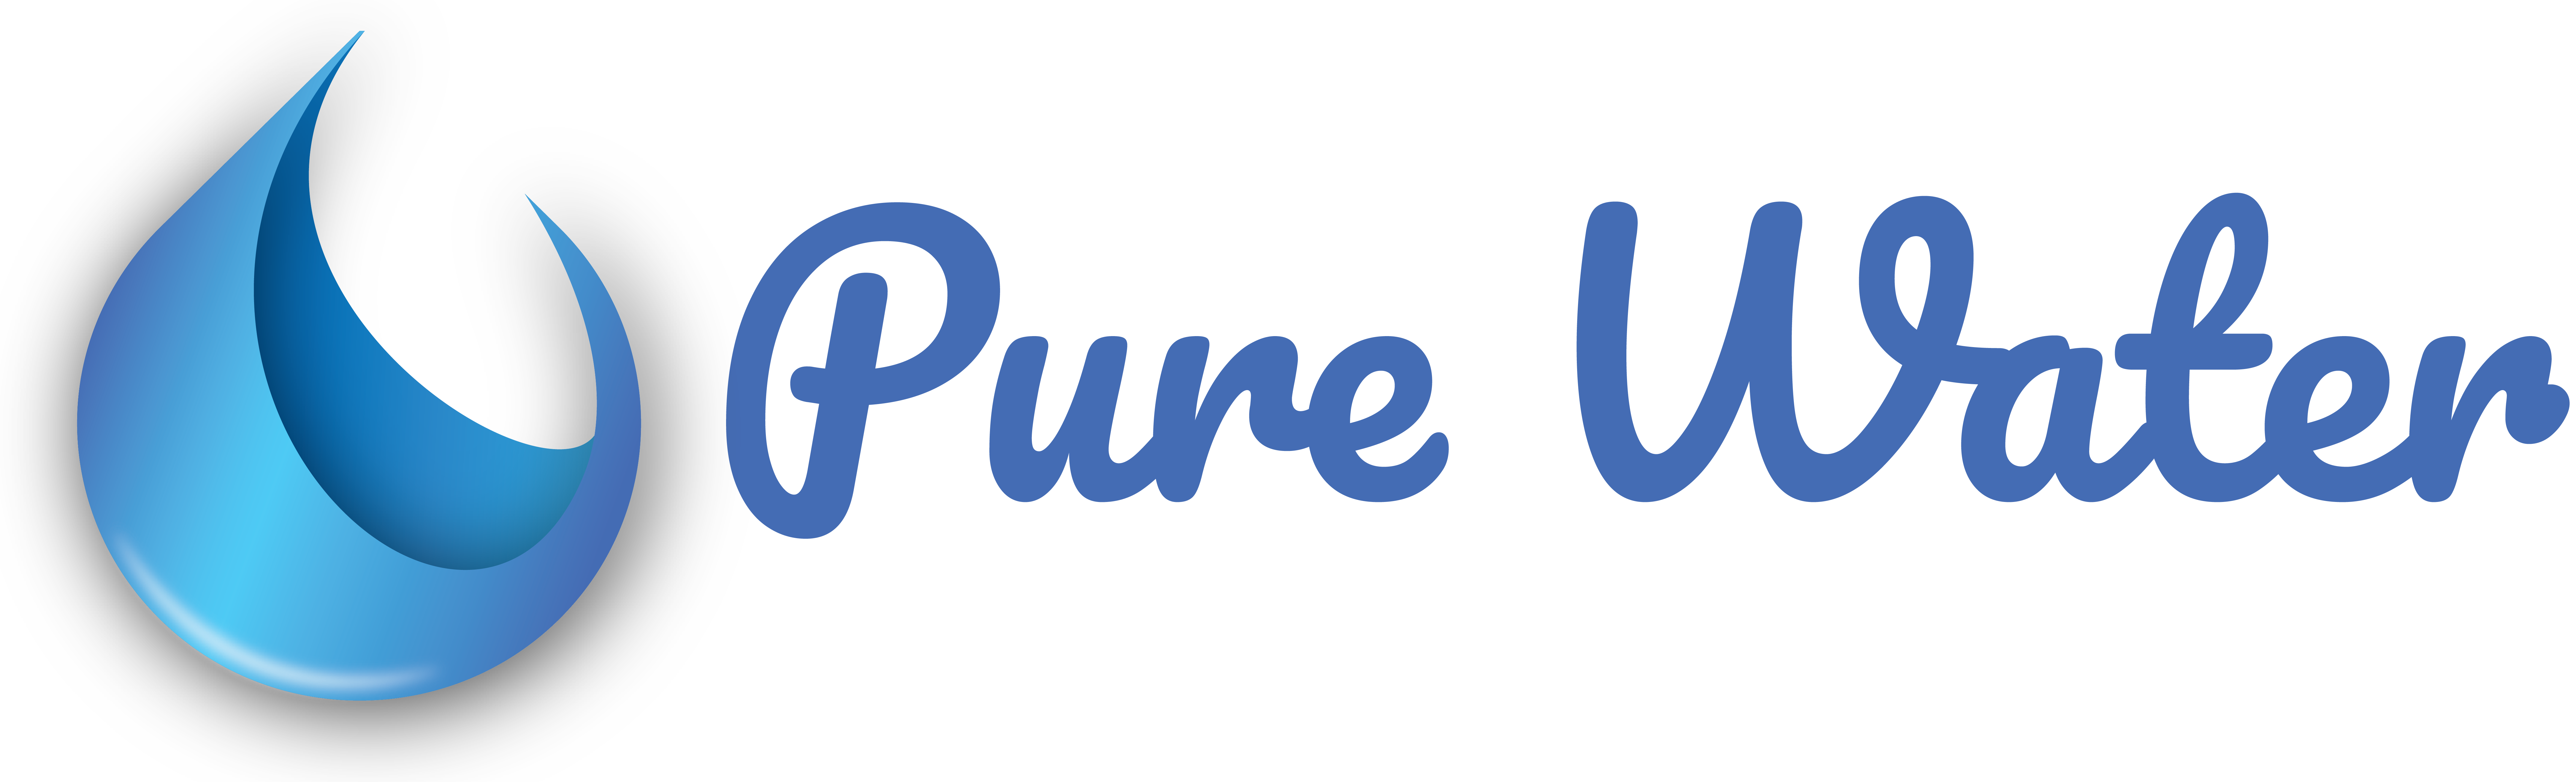 Pure water logo